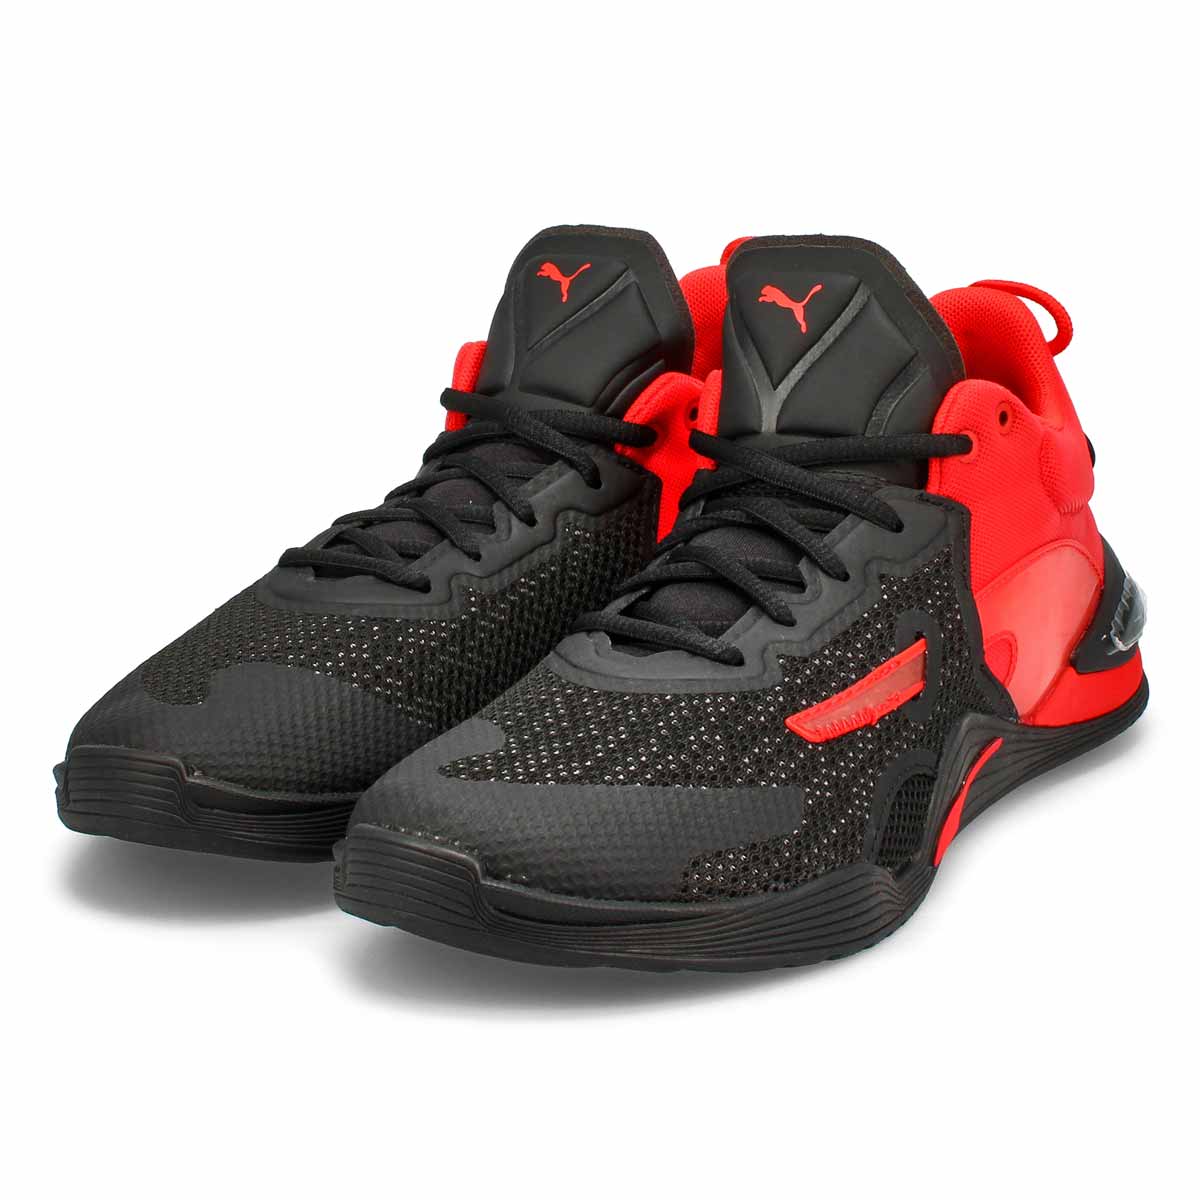 Men's Fuse Sneaker - Poppy red/black